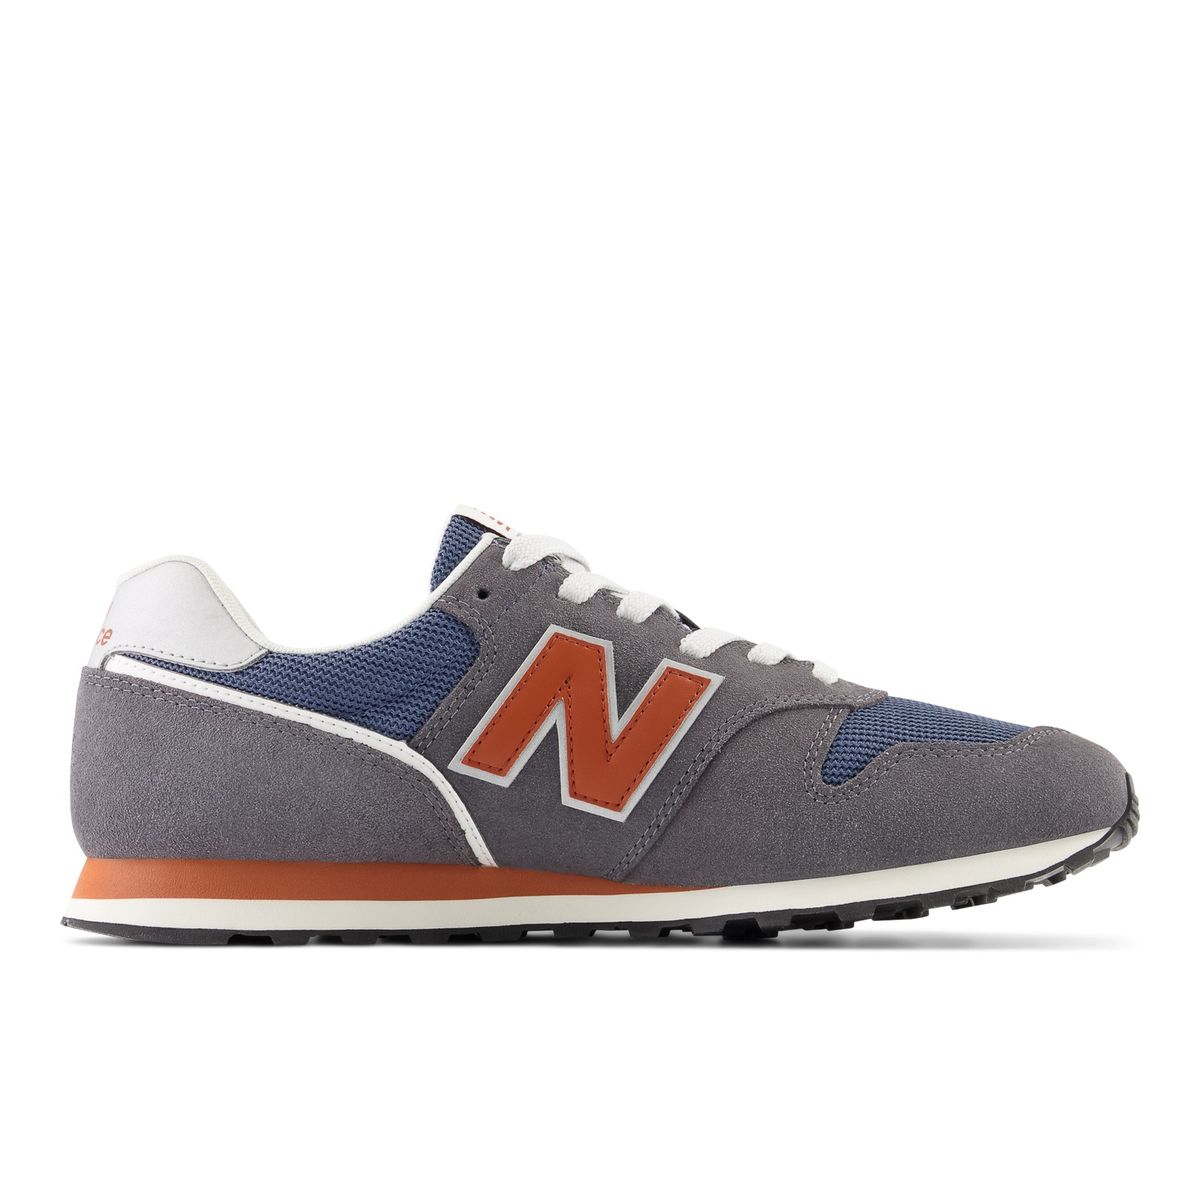 New Balance Men's 373 v2 Lifestyle Shoes - Grey/Blue/Orange | Shop ...